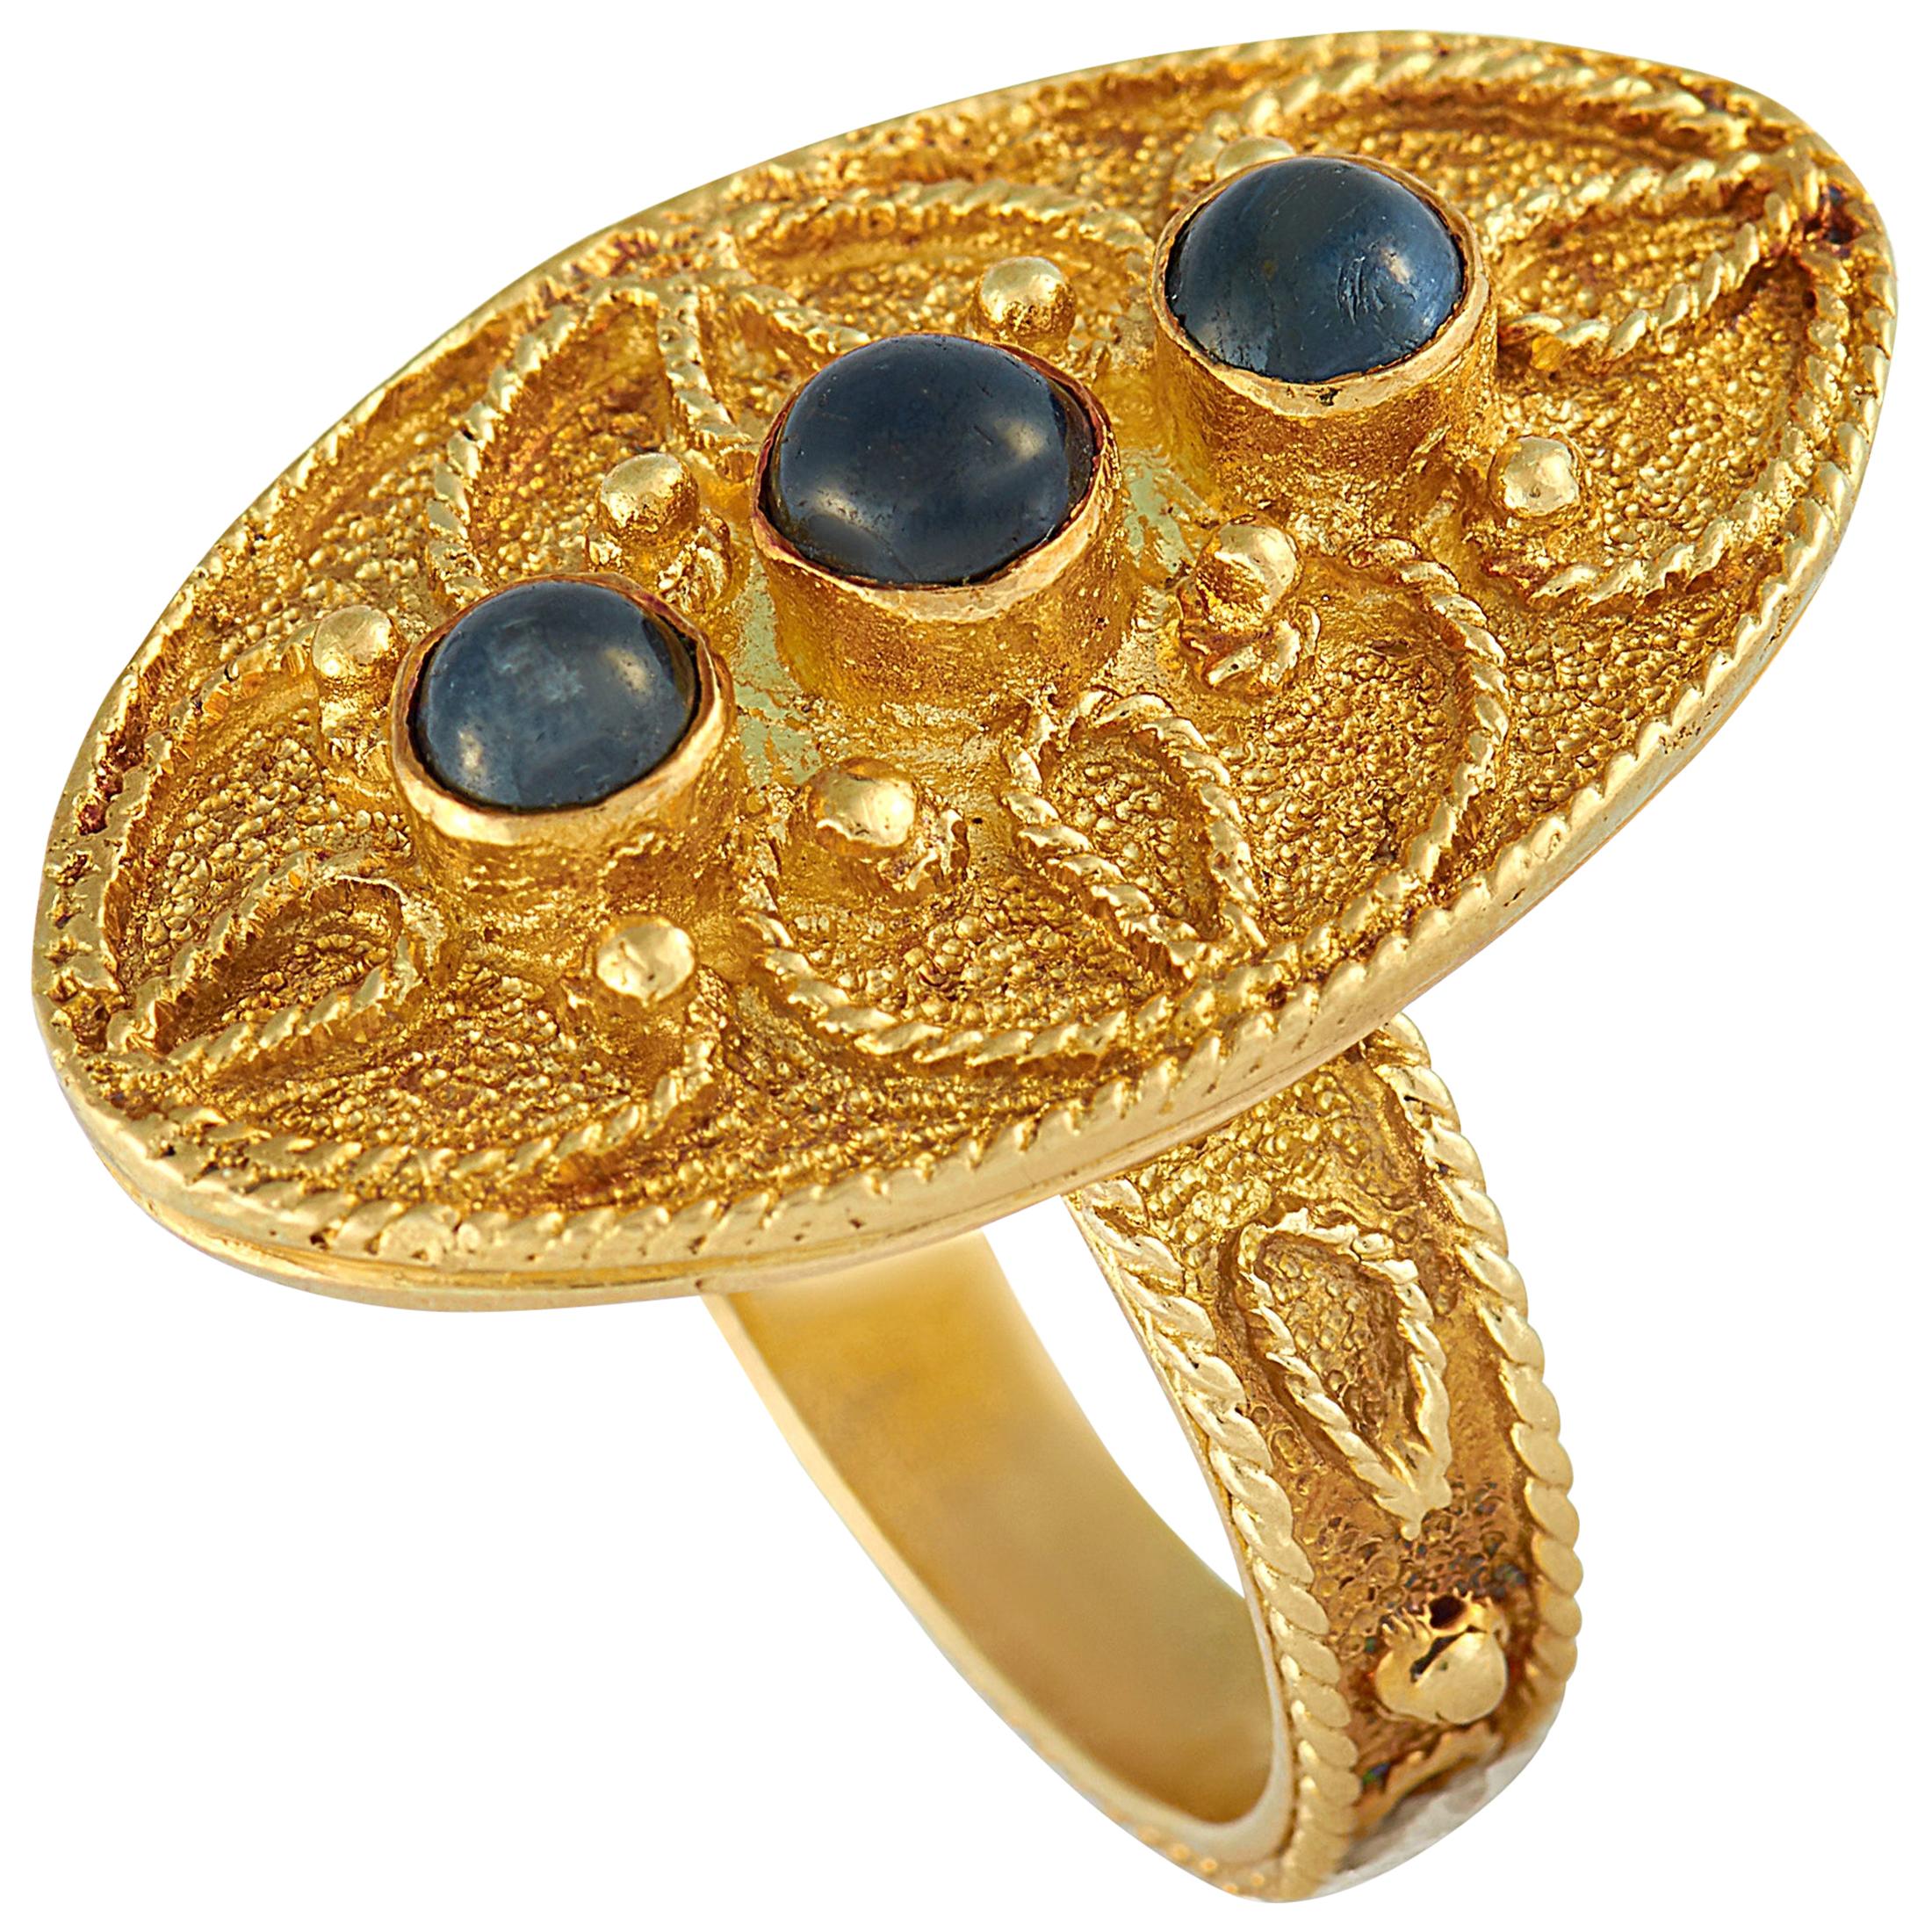 Zolotas 18 Karat Yellow Gold Sapphire Cabochon Ring